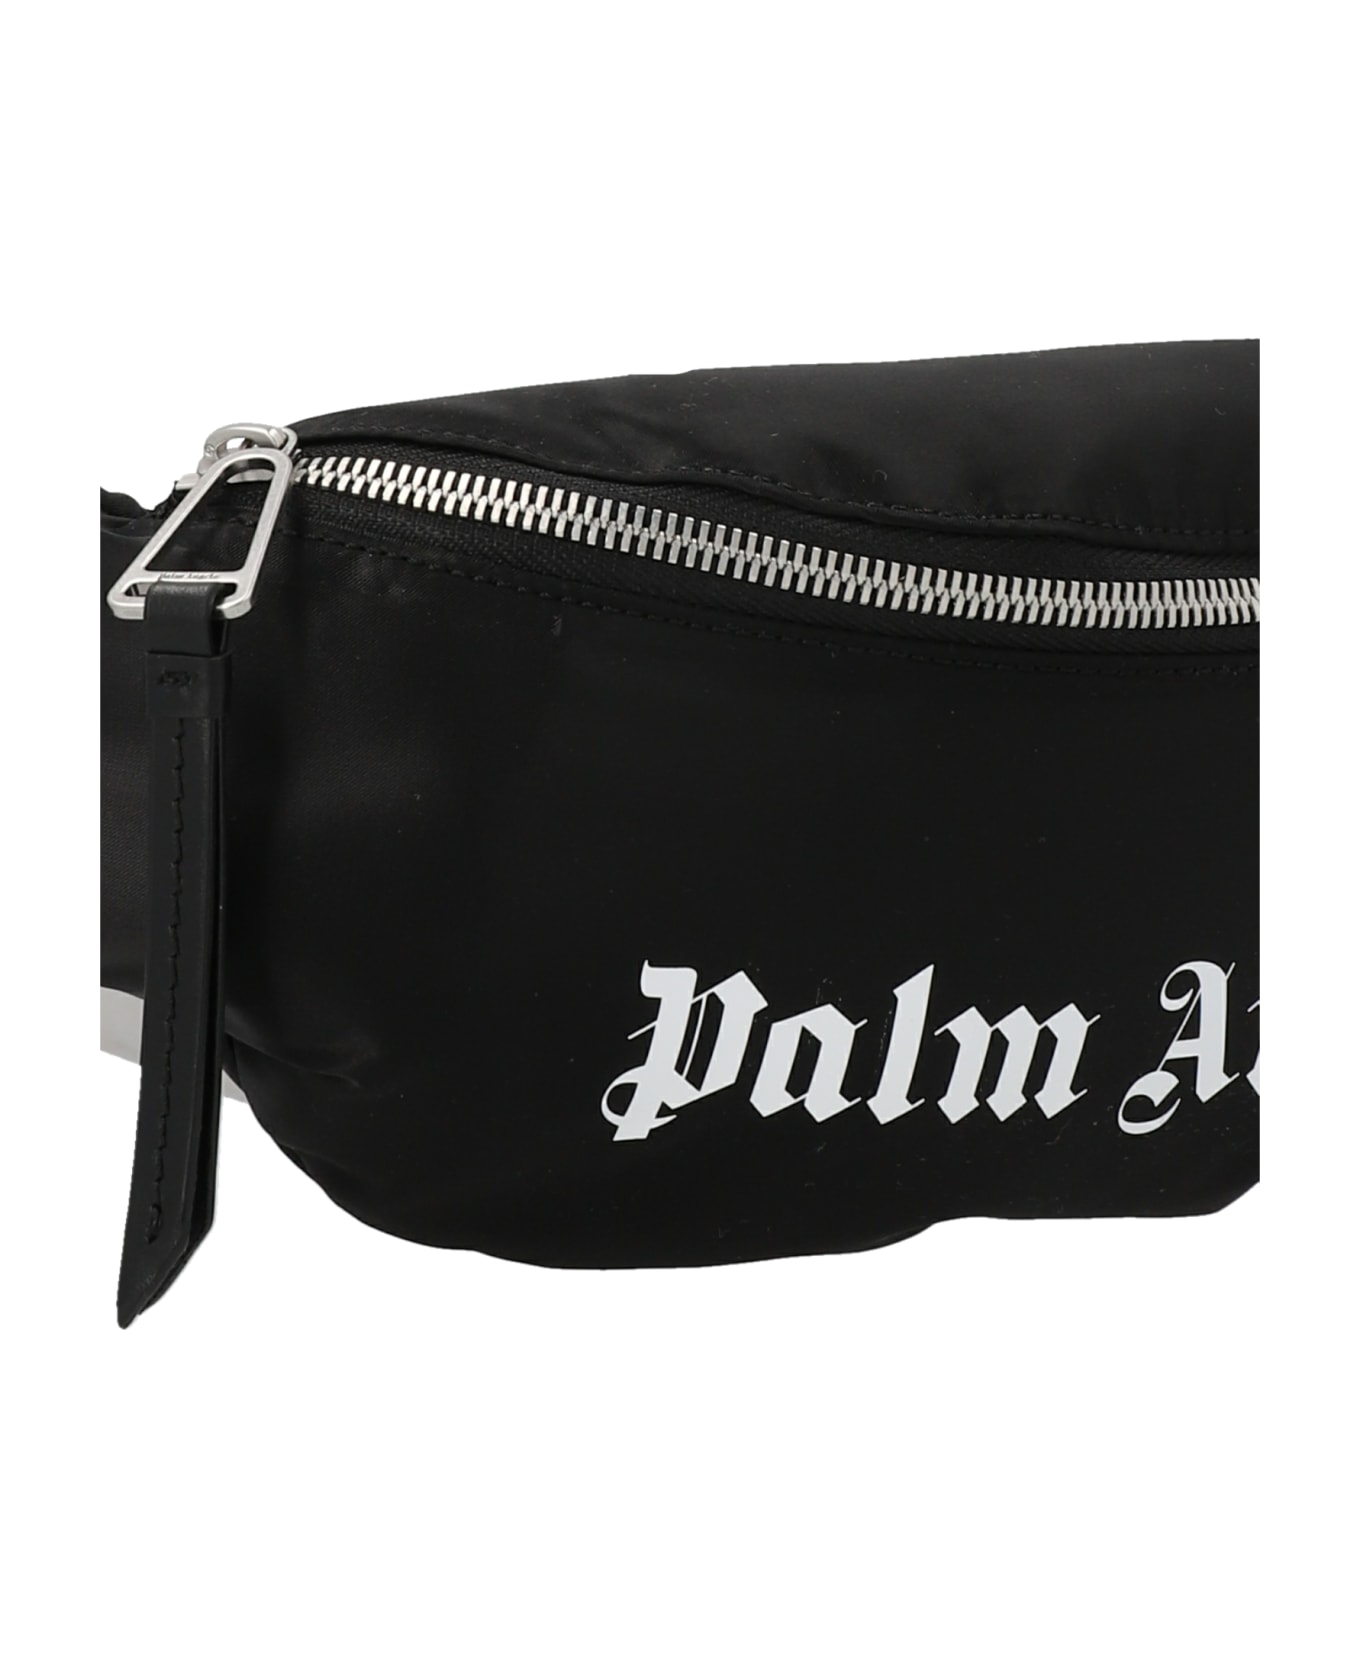 Palm Angels Logo Waist Bag - White/Black